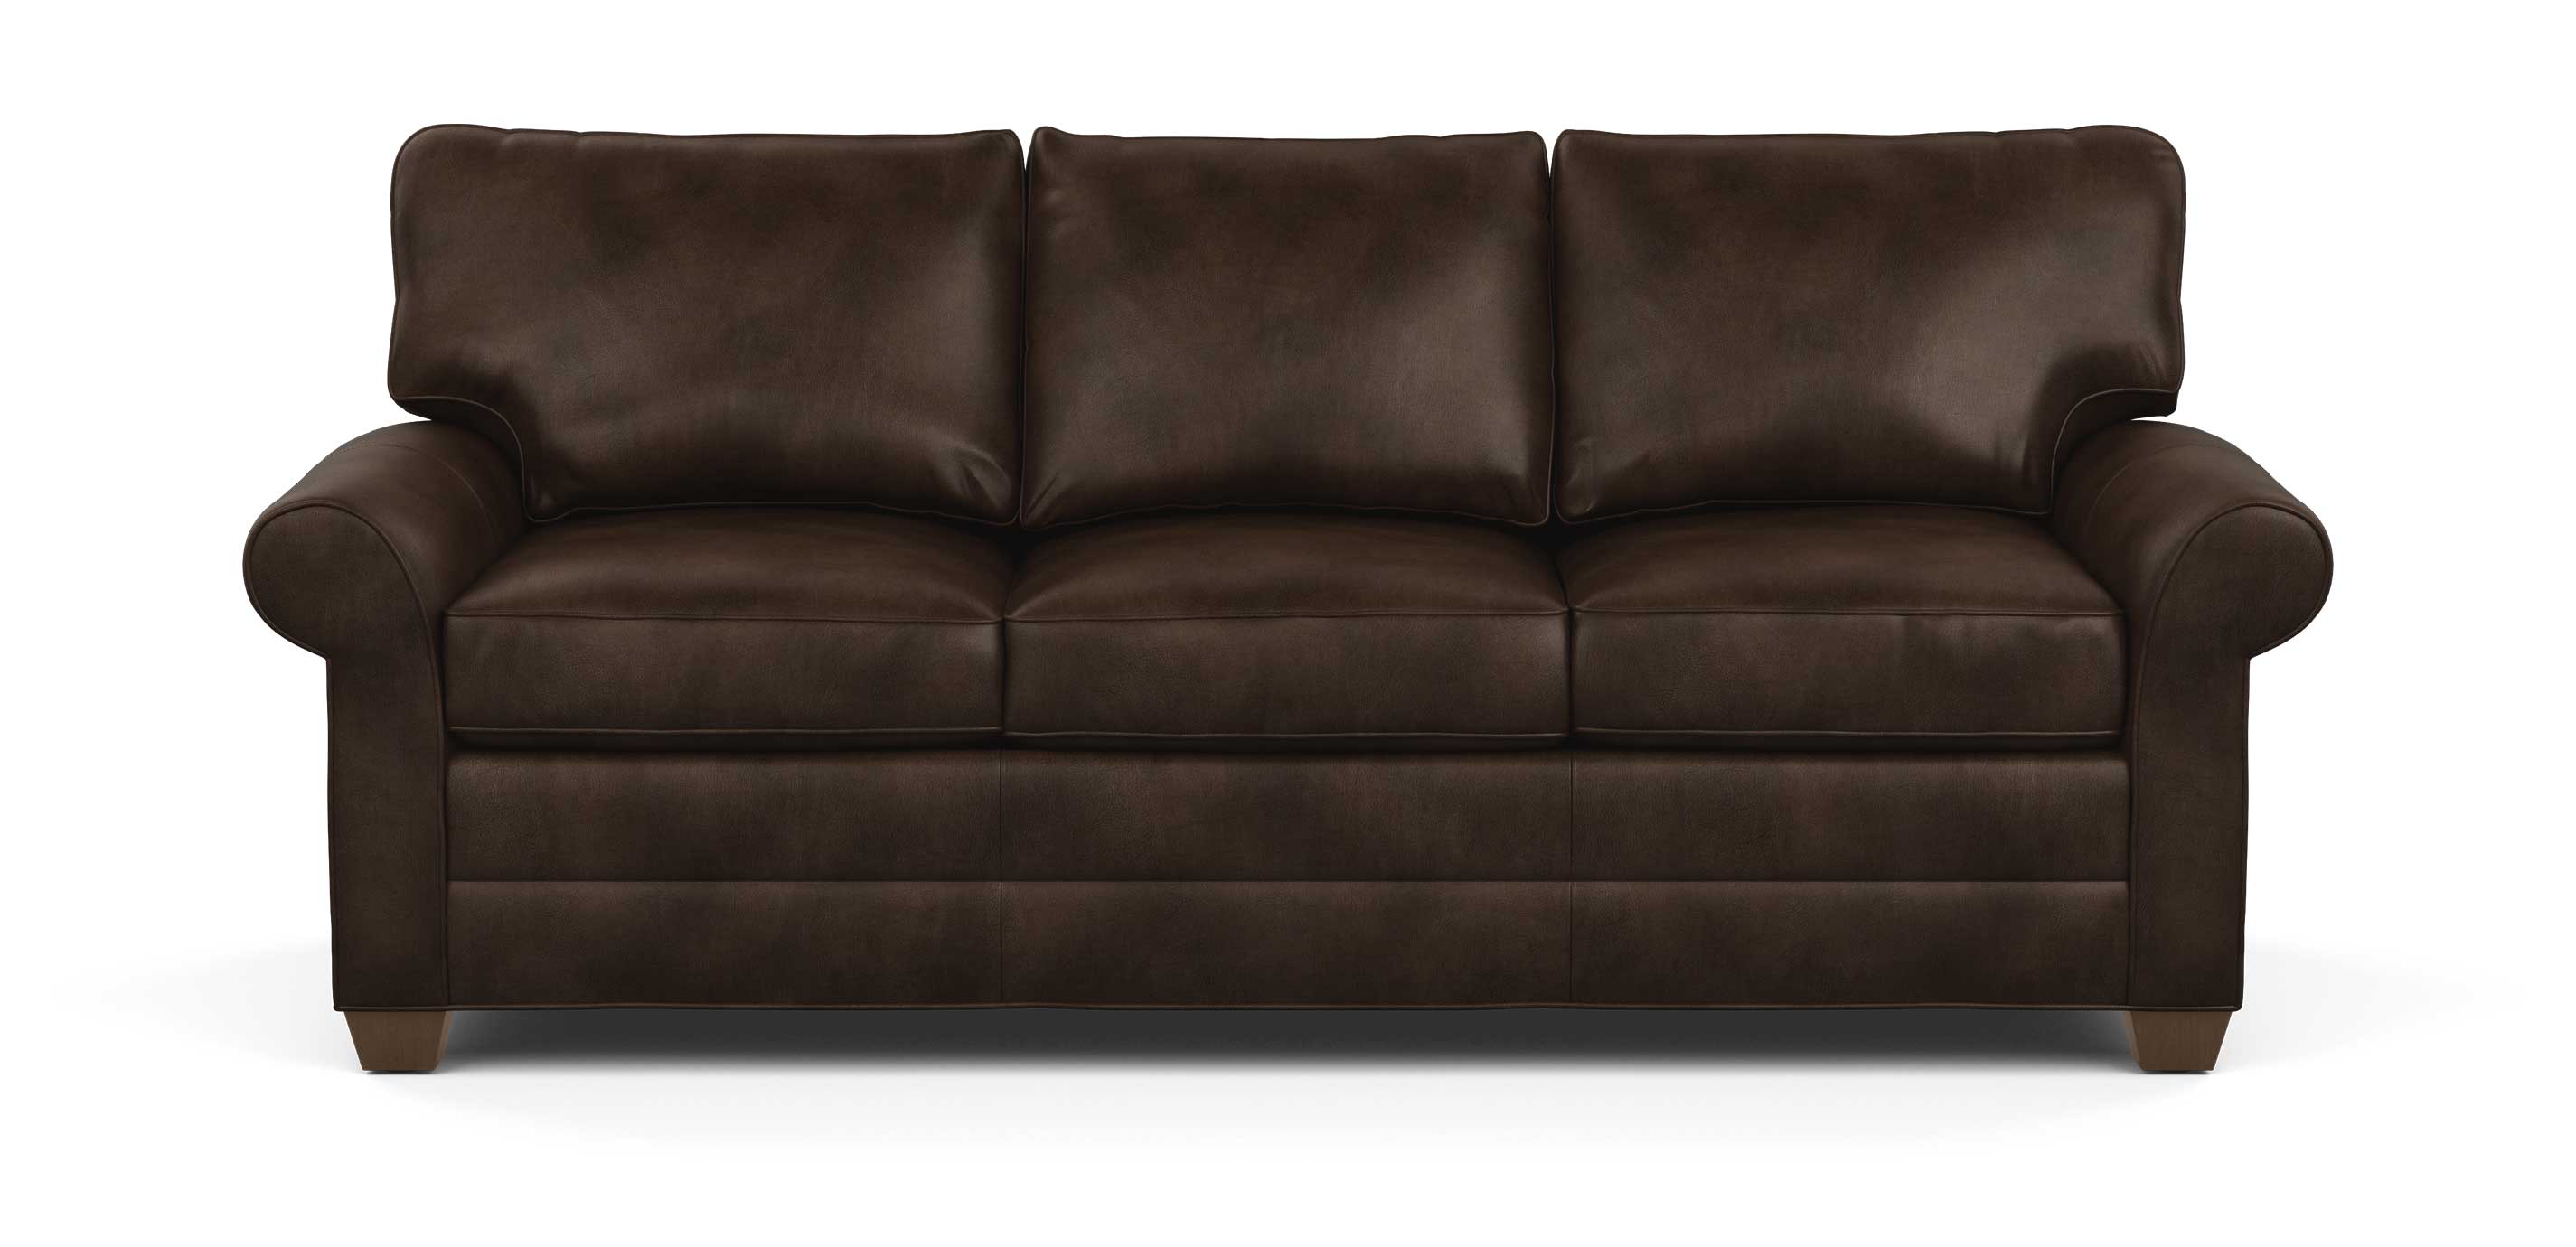 bennett leather sofa ethan allen